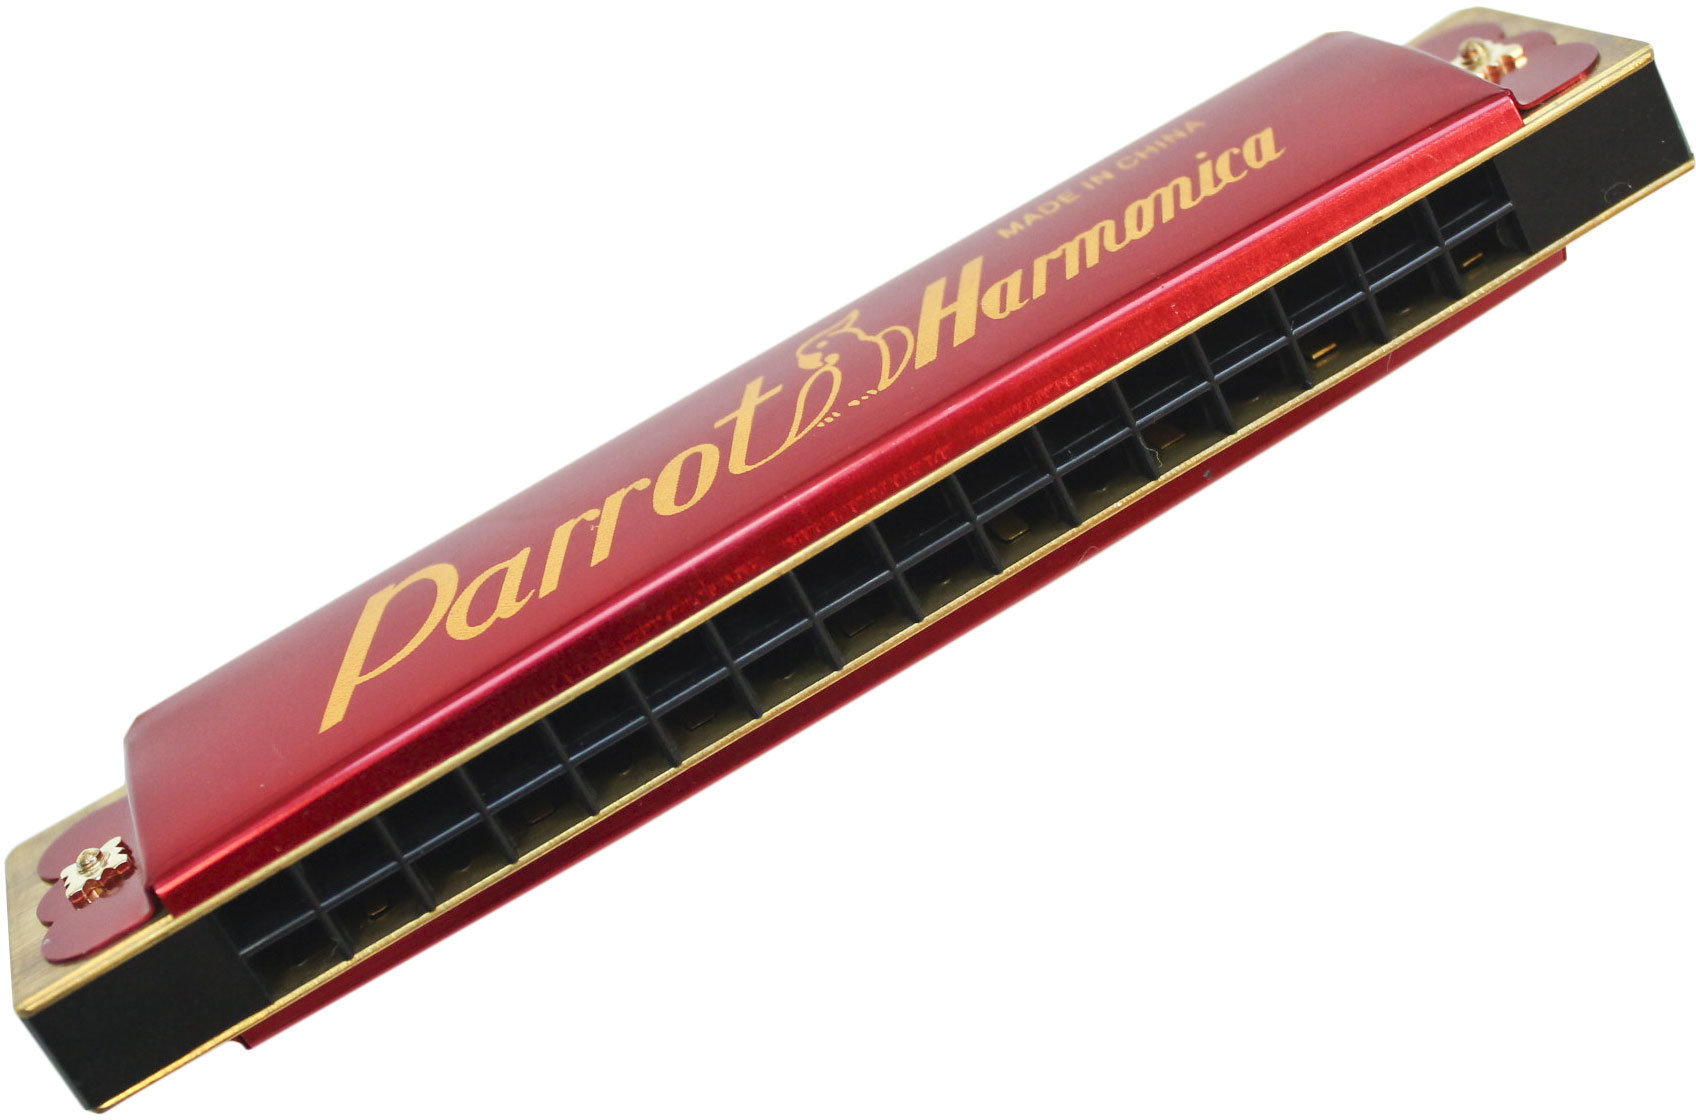 Diatonic harmonica Parrot HD 16 1 G